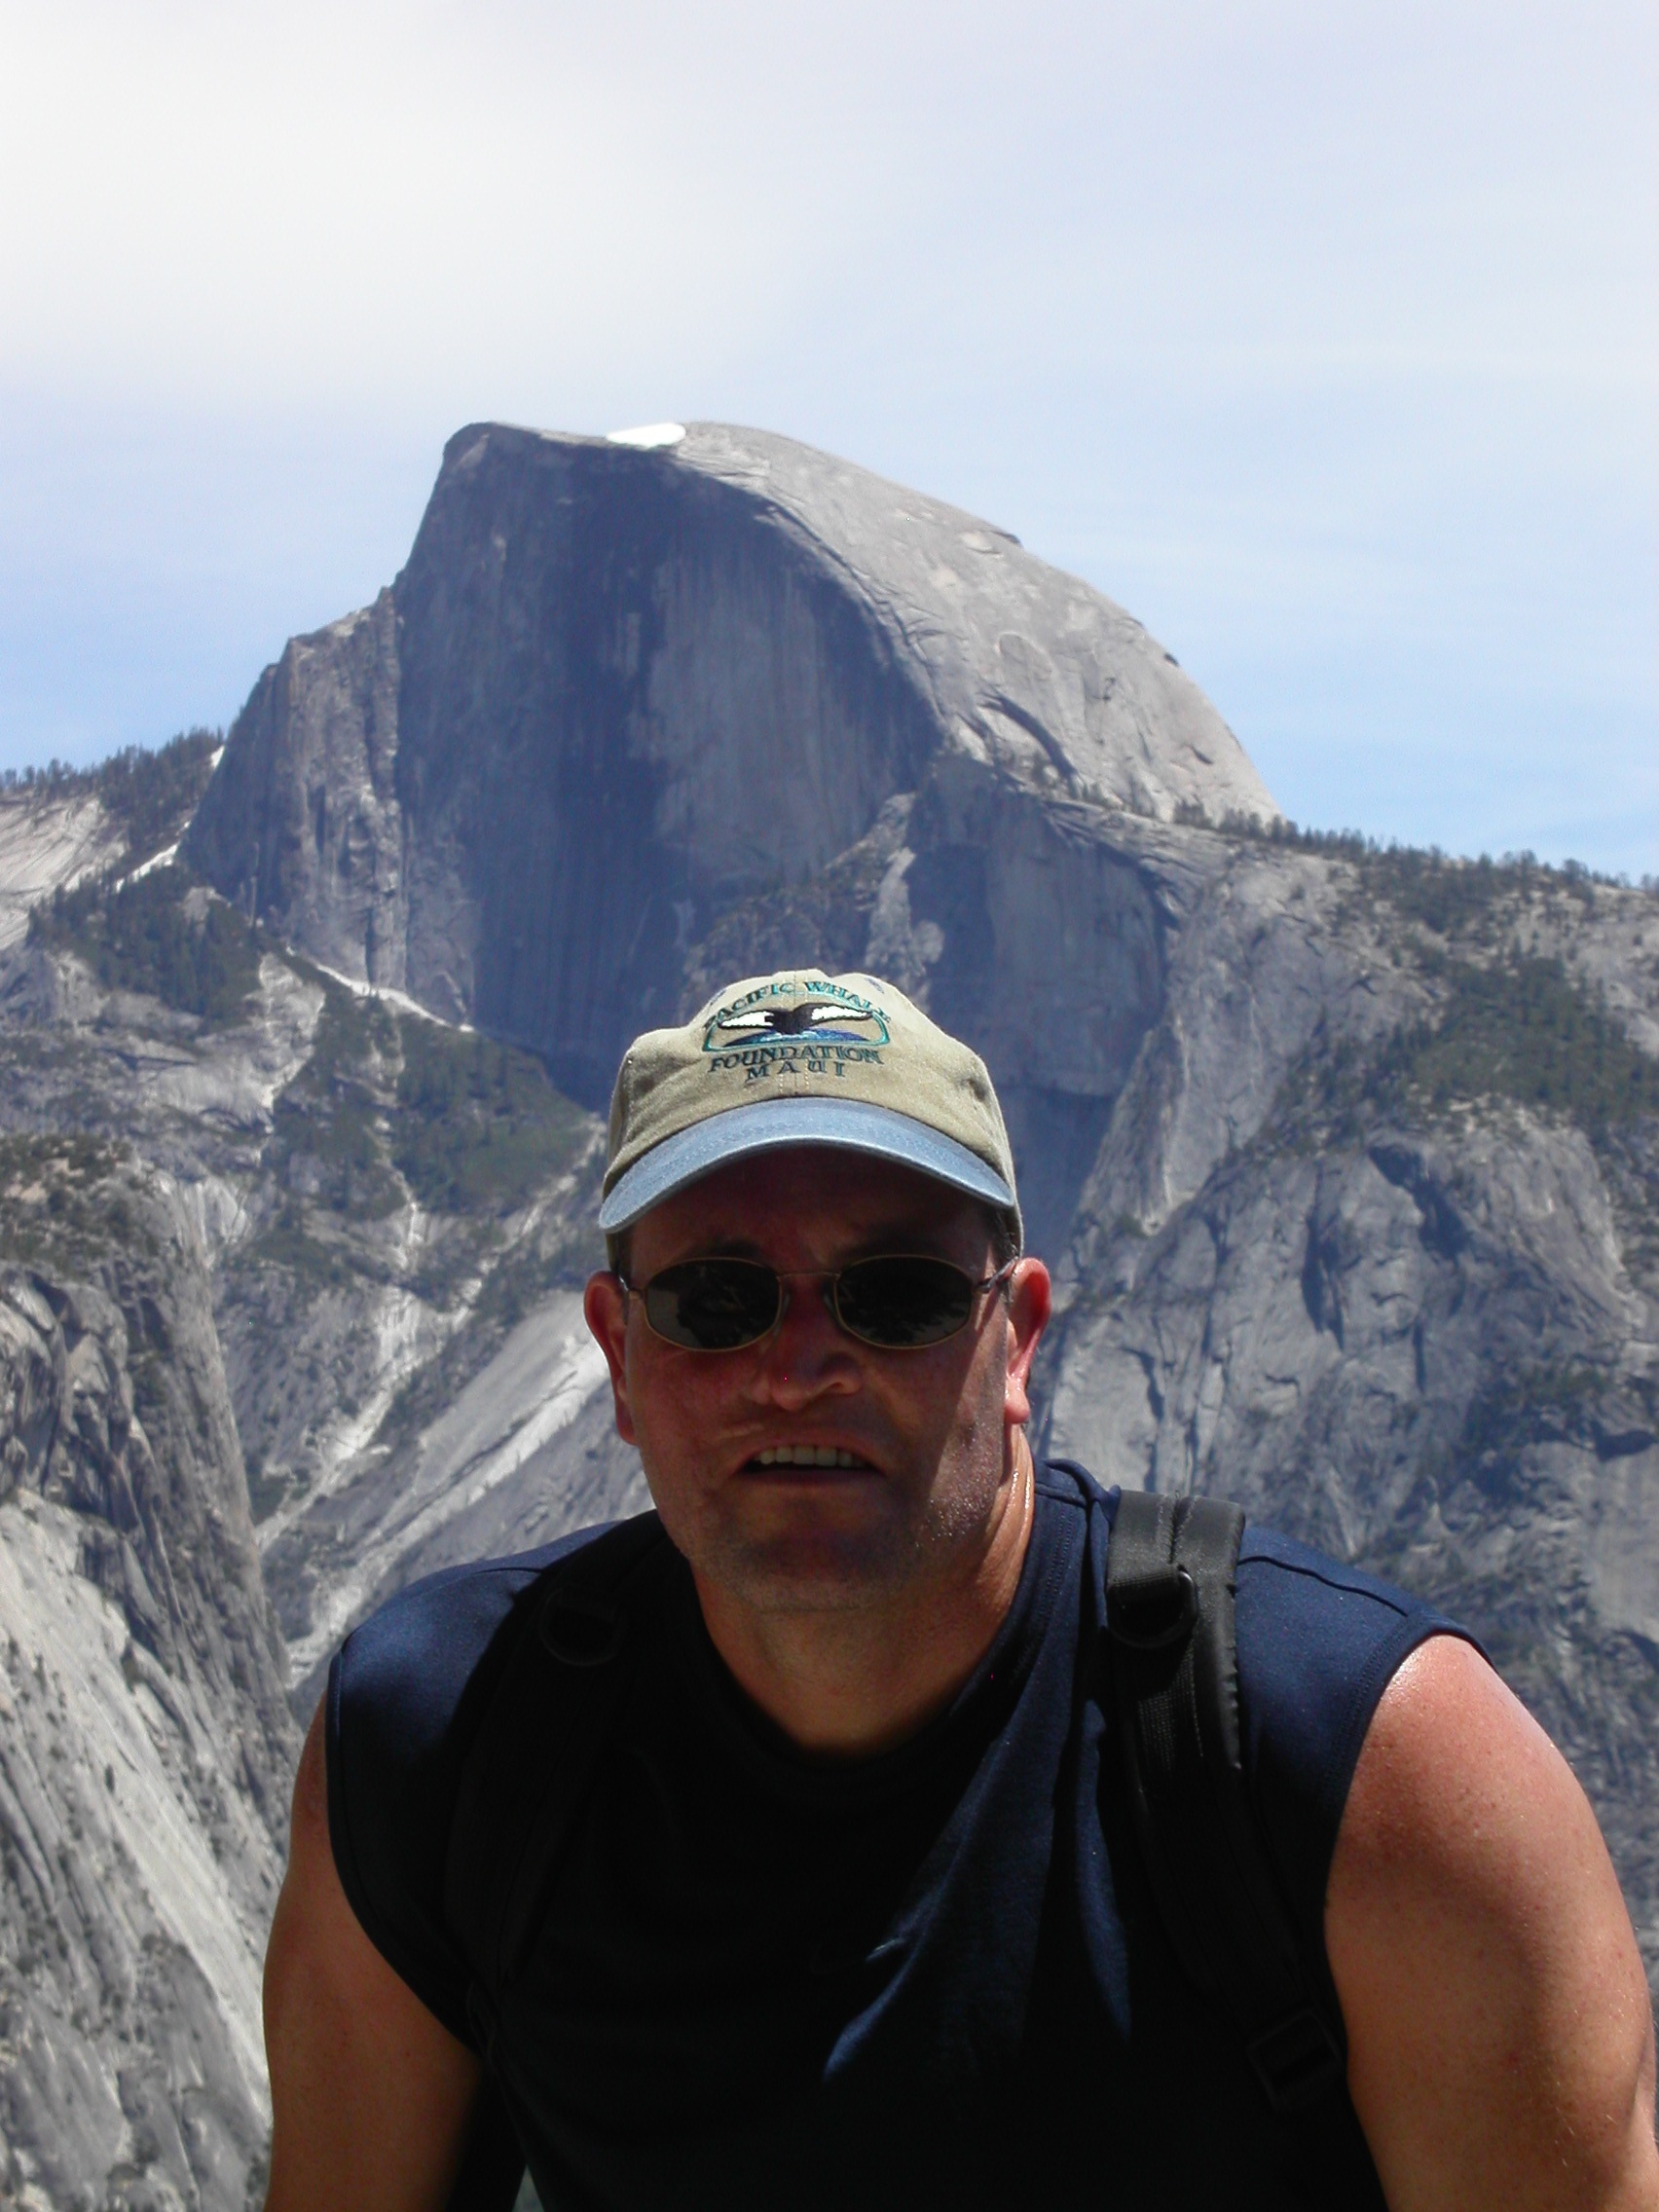 Terry Healey at Yosemite – TERRY HEALEY